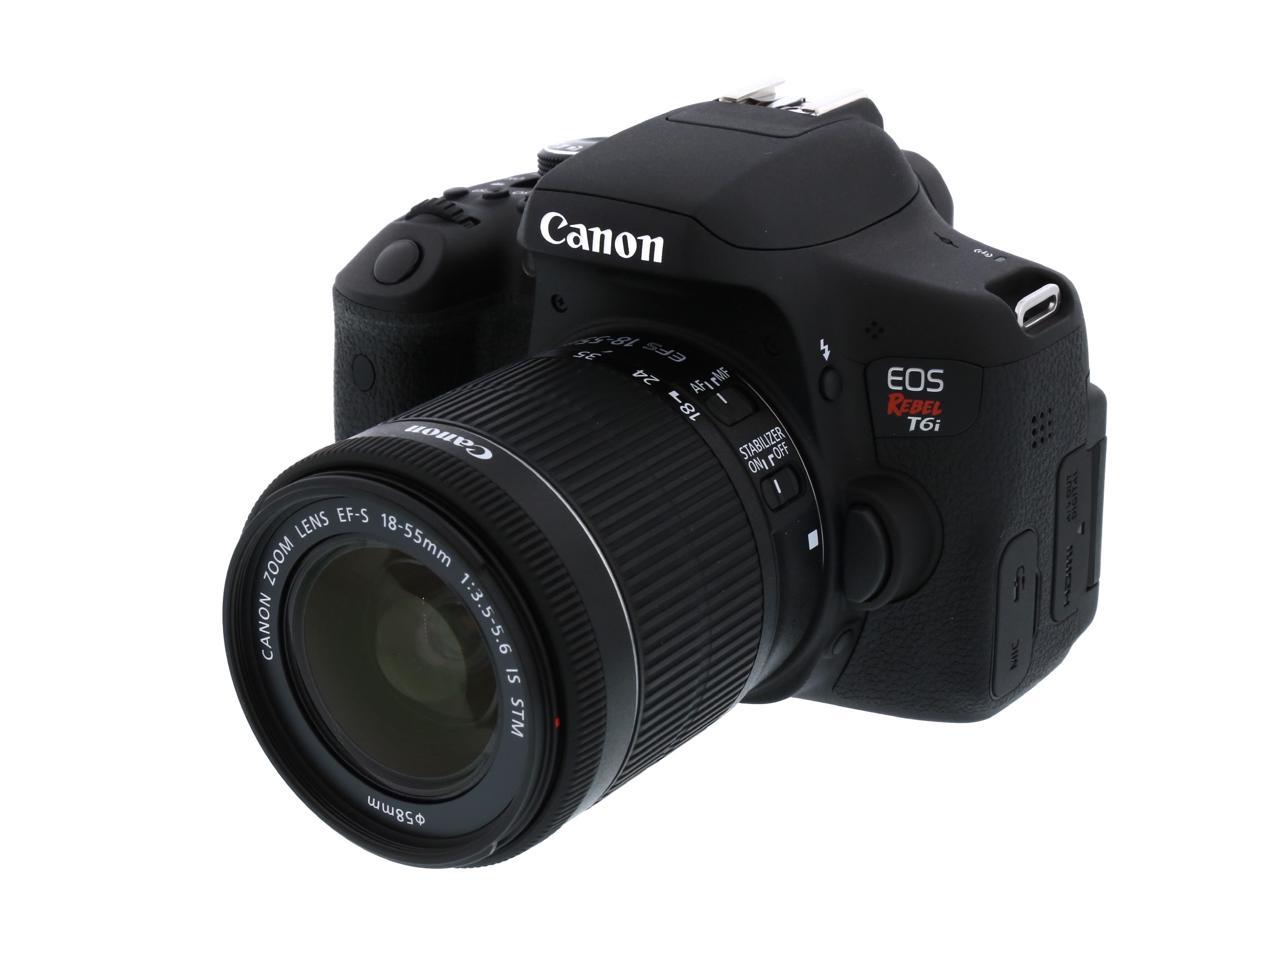 Canon EOS Rebel T6i 0591C003 Black Digital SLR Camera with EF 